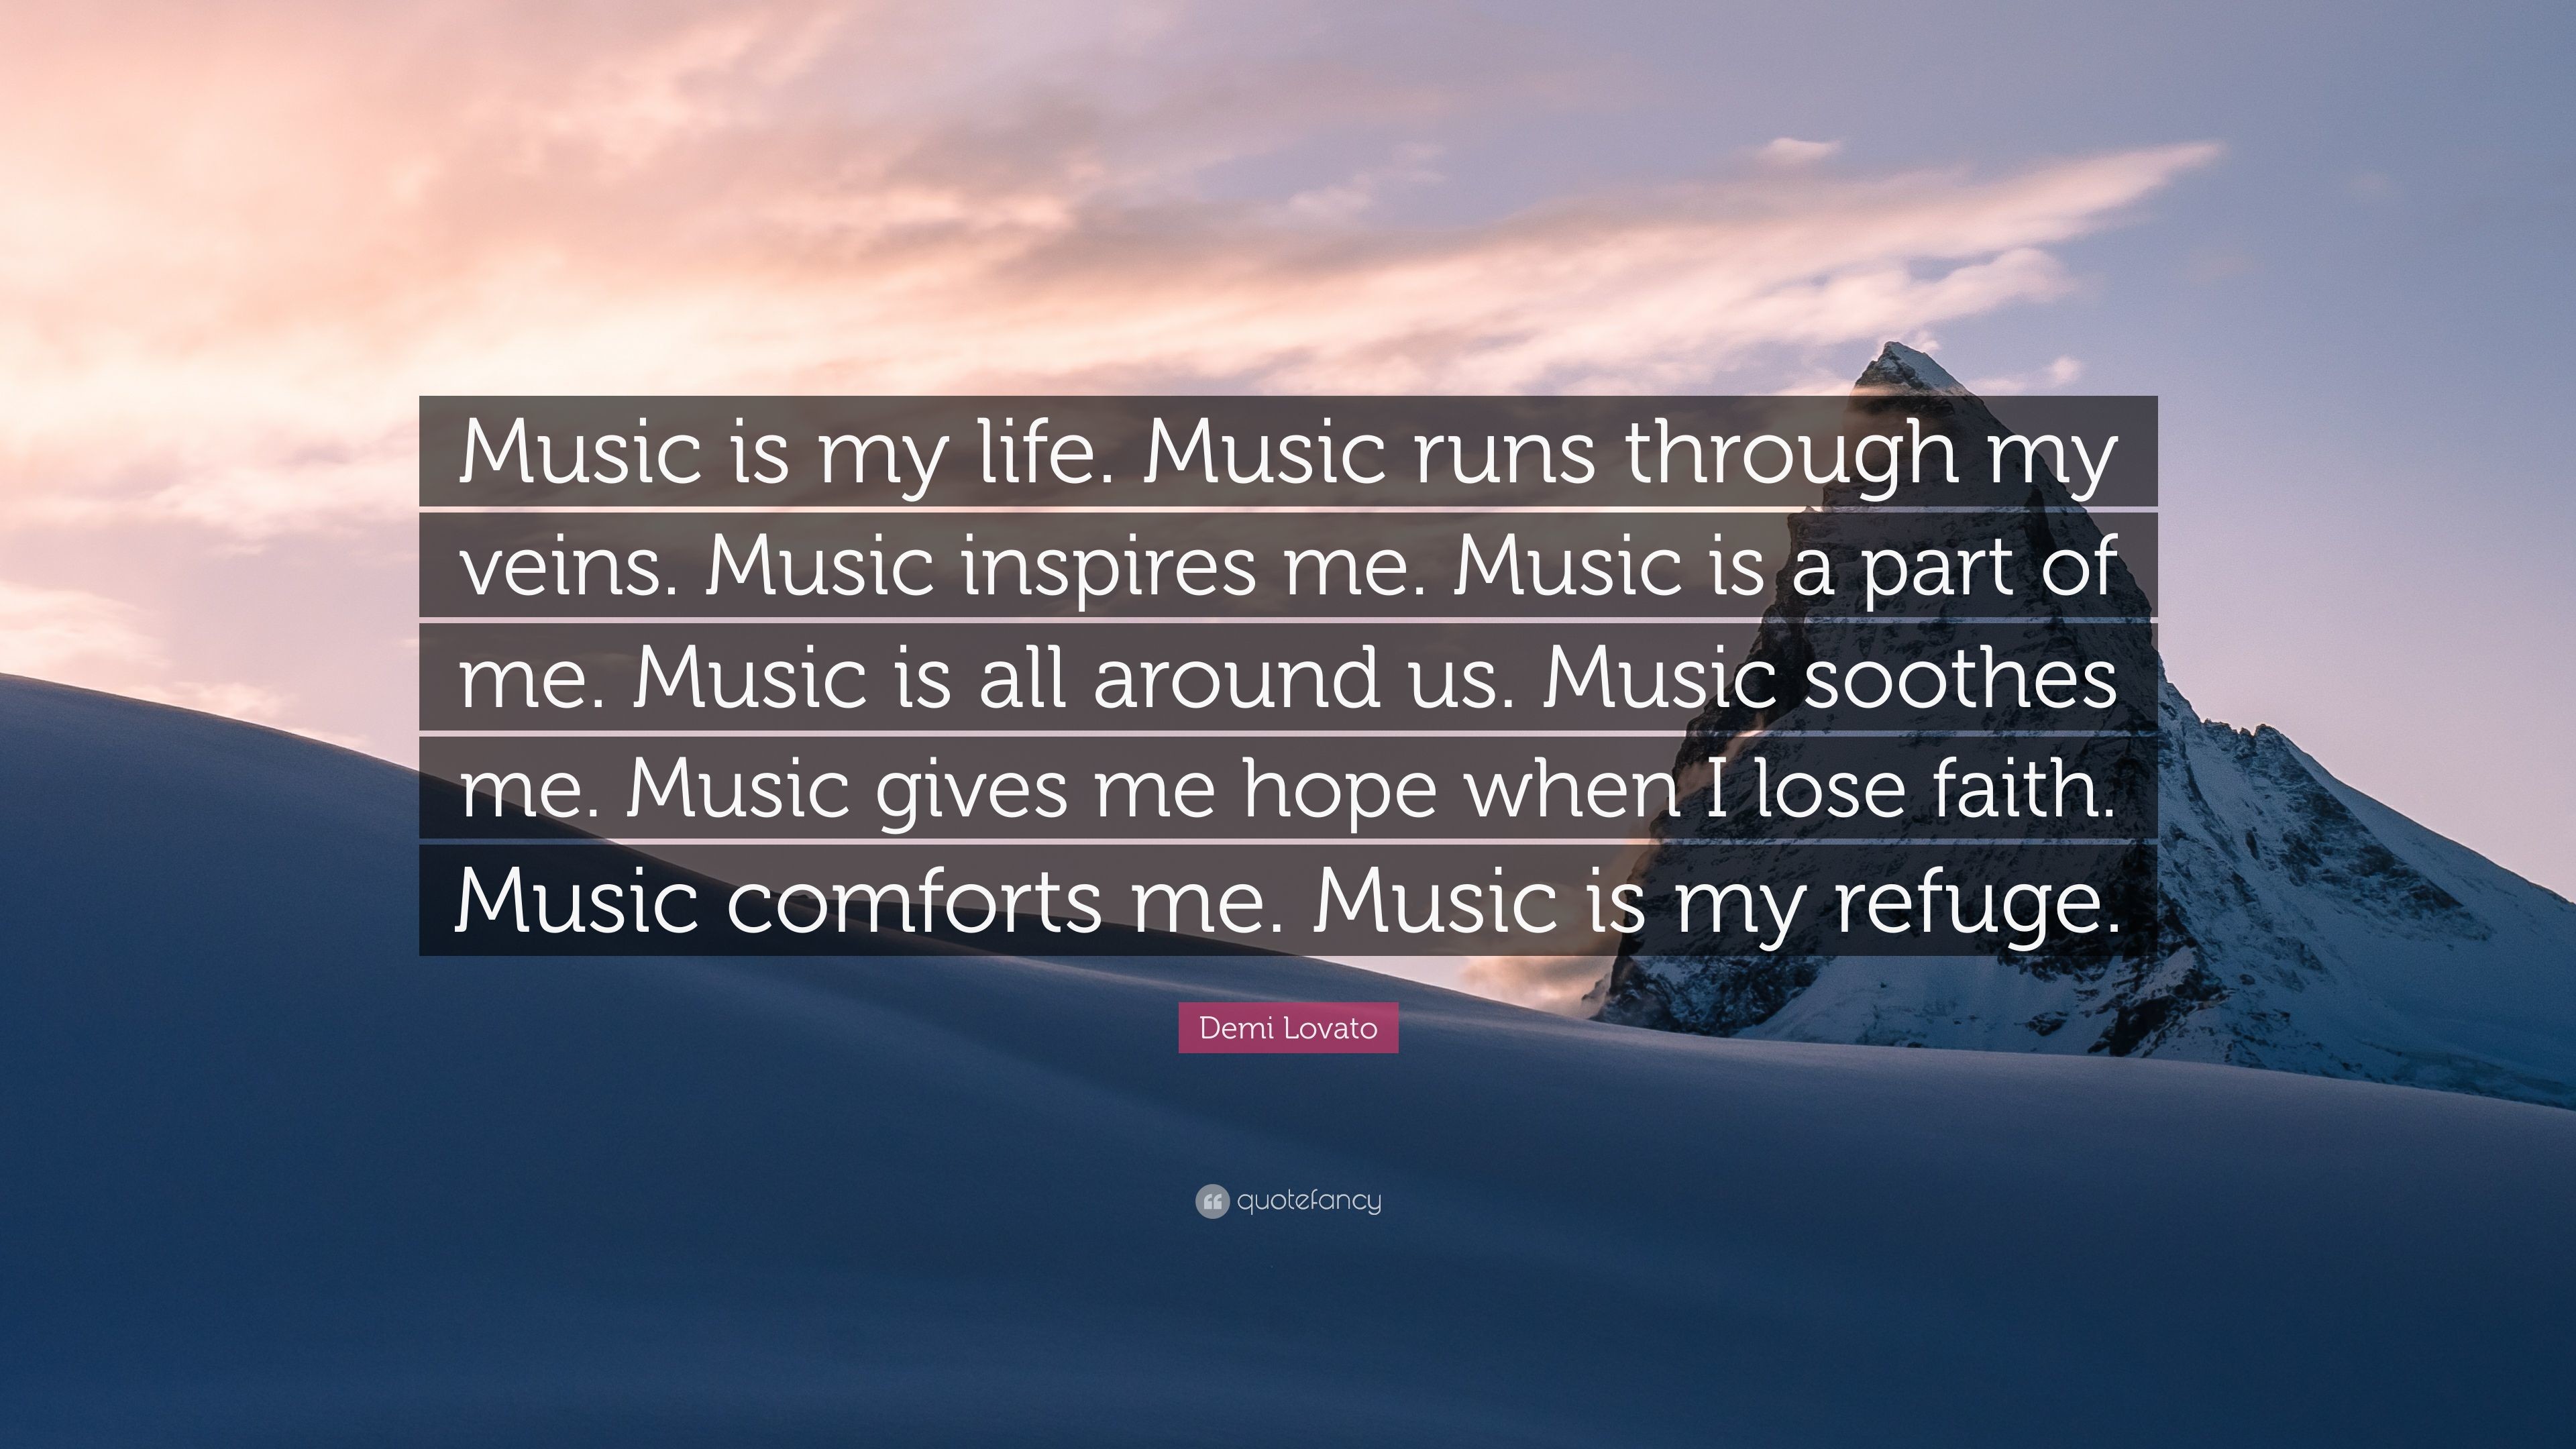 3840x2160 Demi Lovato Quote: “Music is my life. Music runs through my veins.